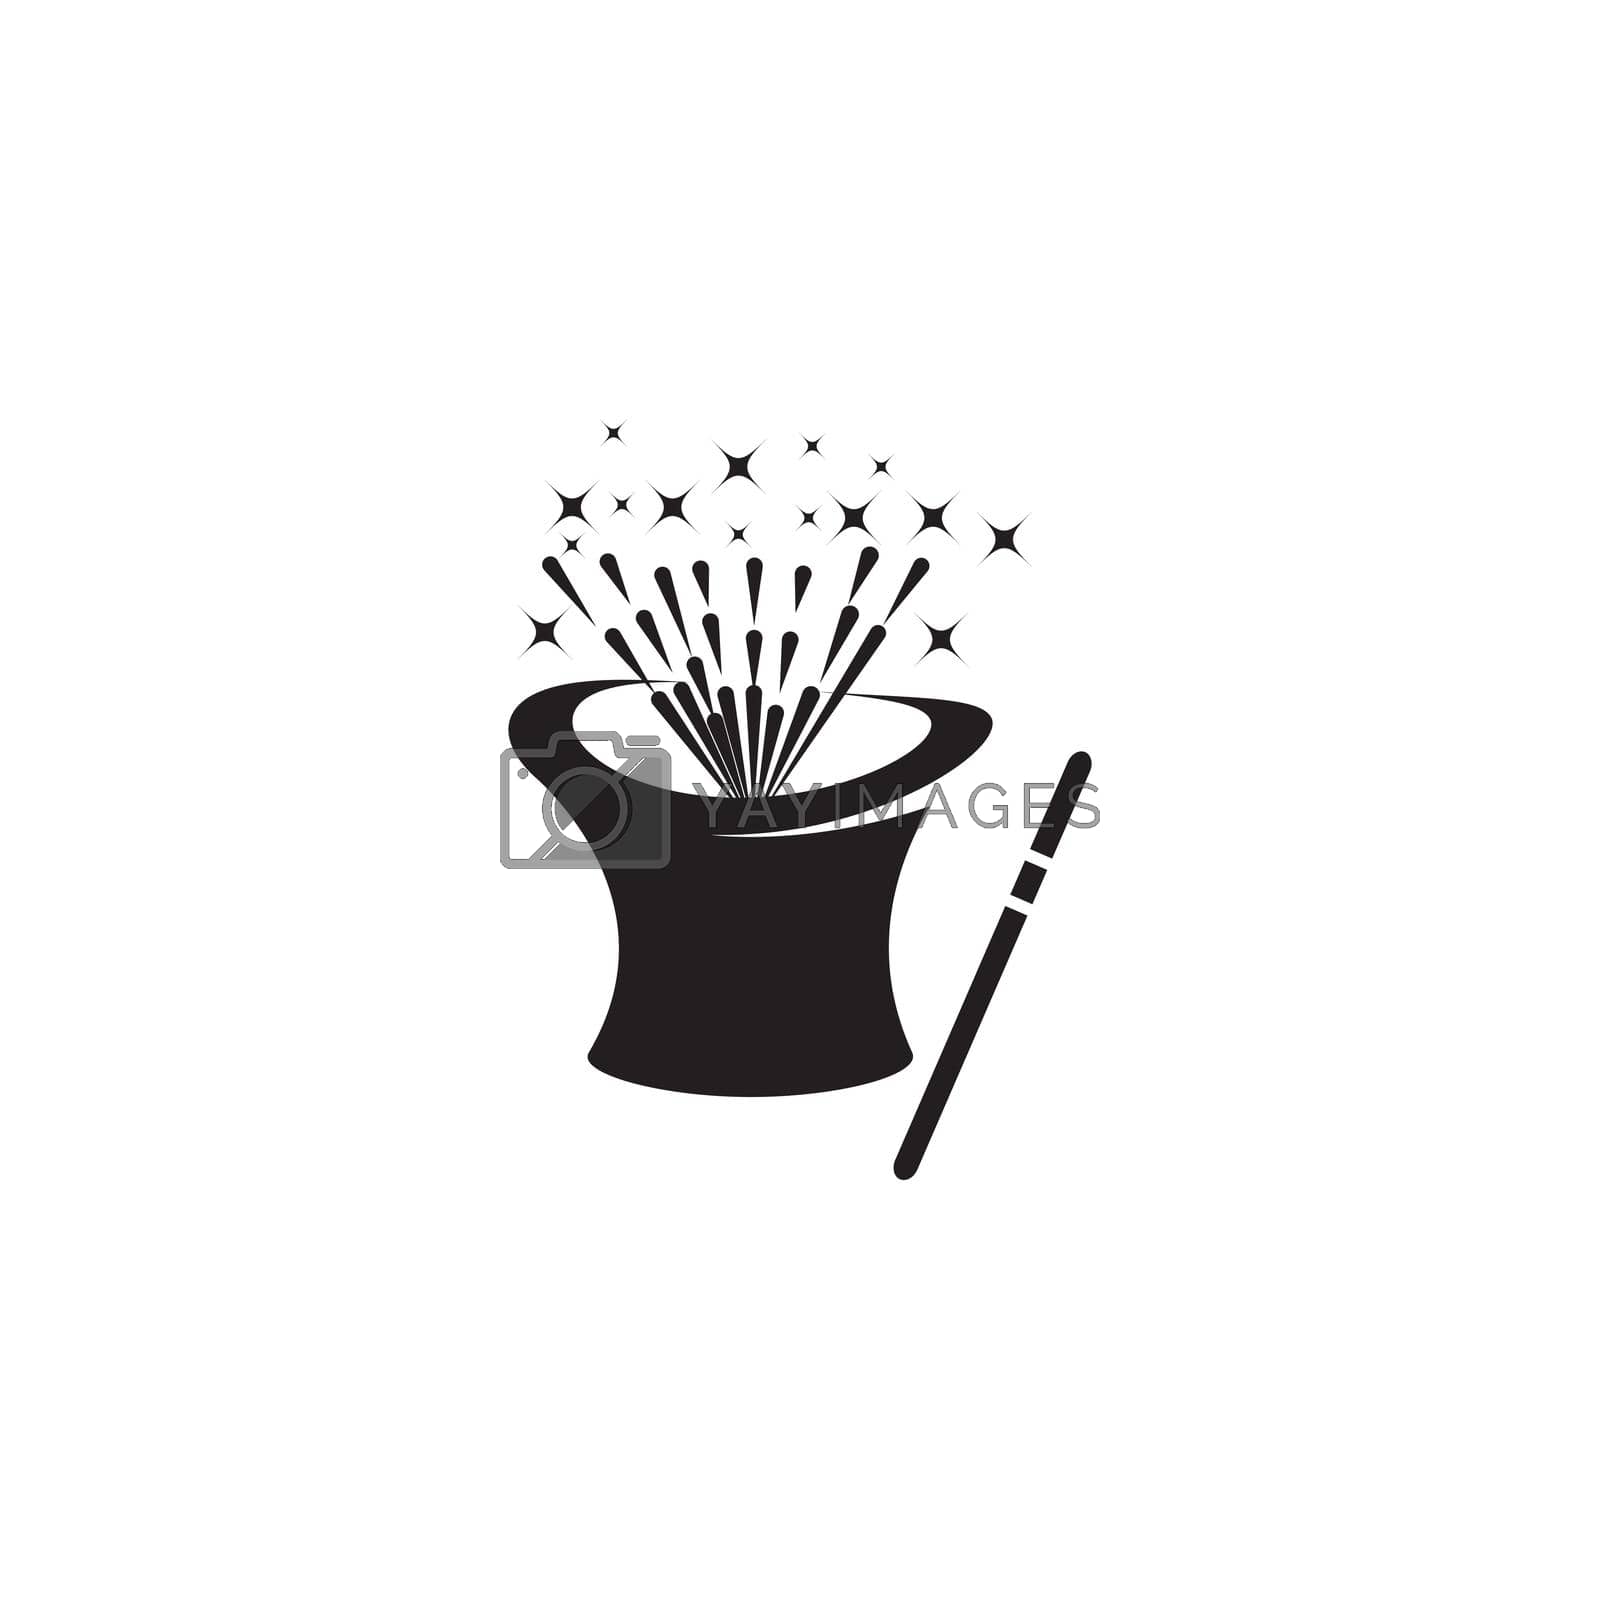 Royalty free image of magic stick logo by awk